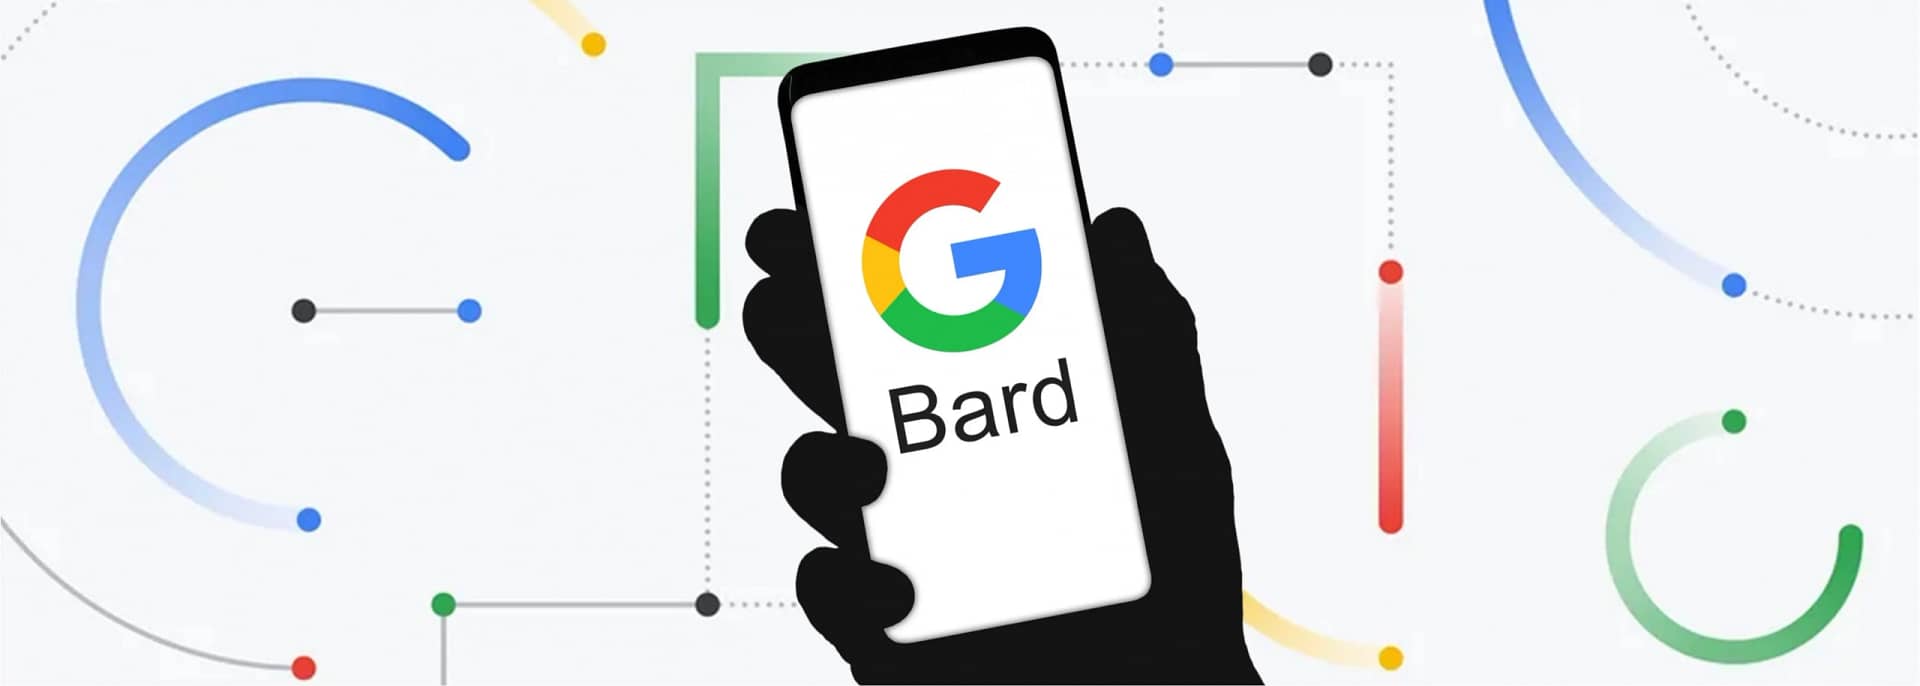 Google Bard AI: Revolutionizing the Future of Content Creation